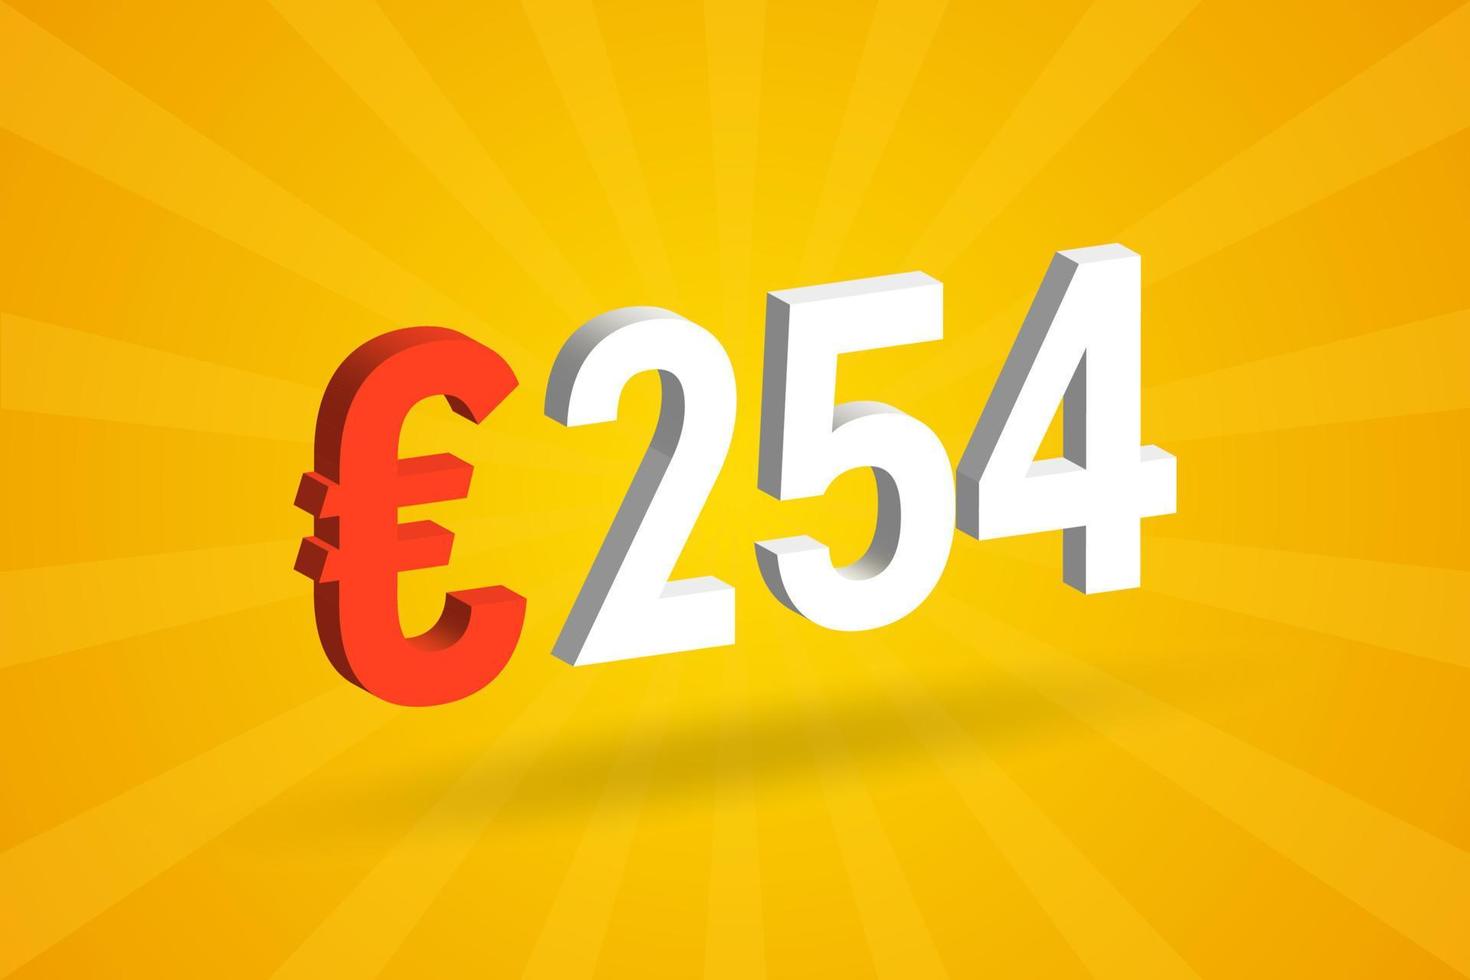 254 Euro Currency 3D vector text symbol. 3D 254 Euro European Union Money stock vector